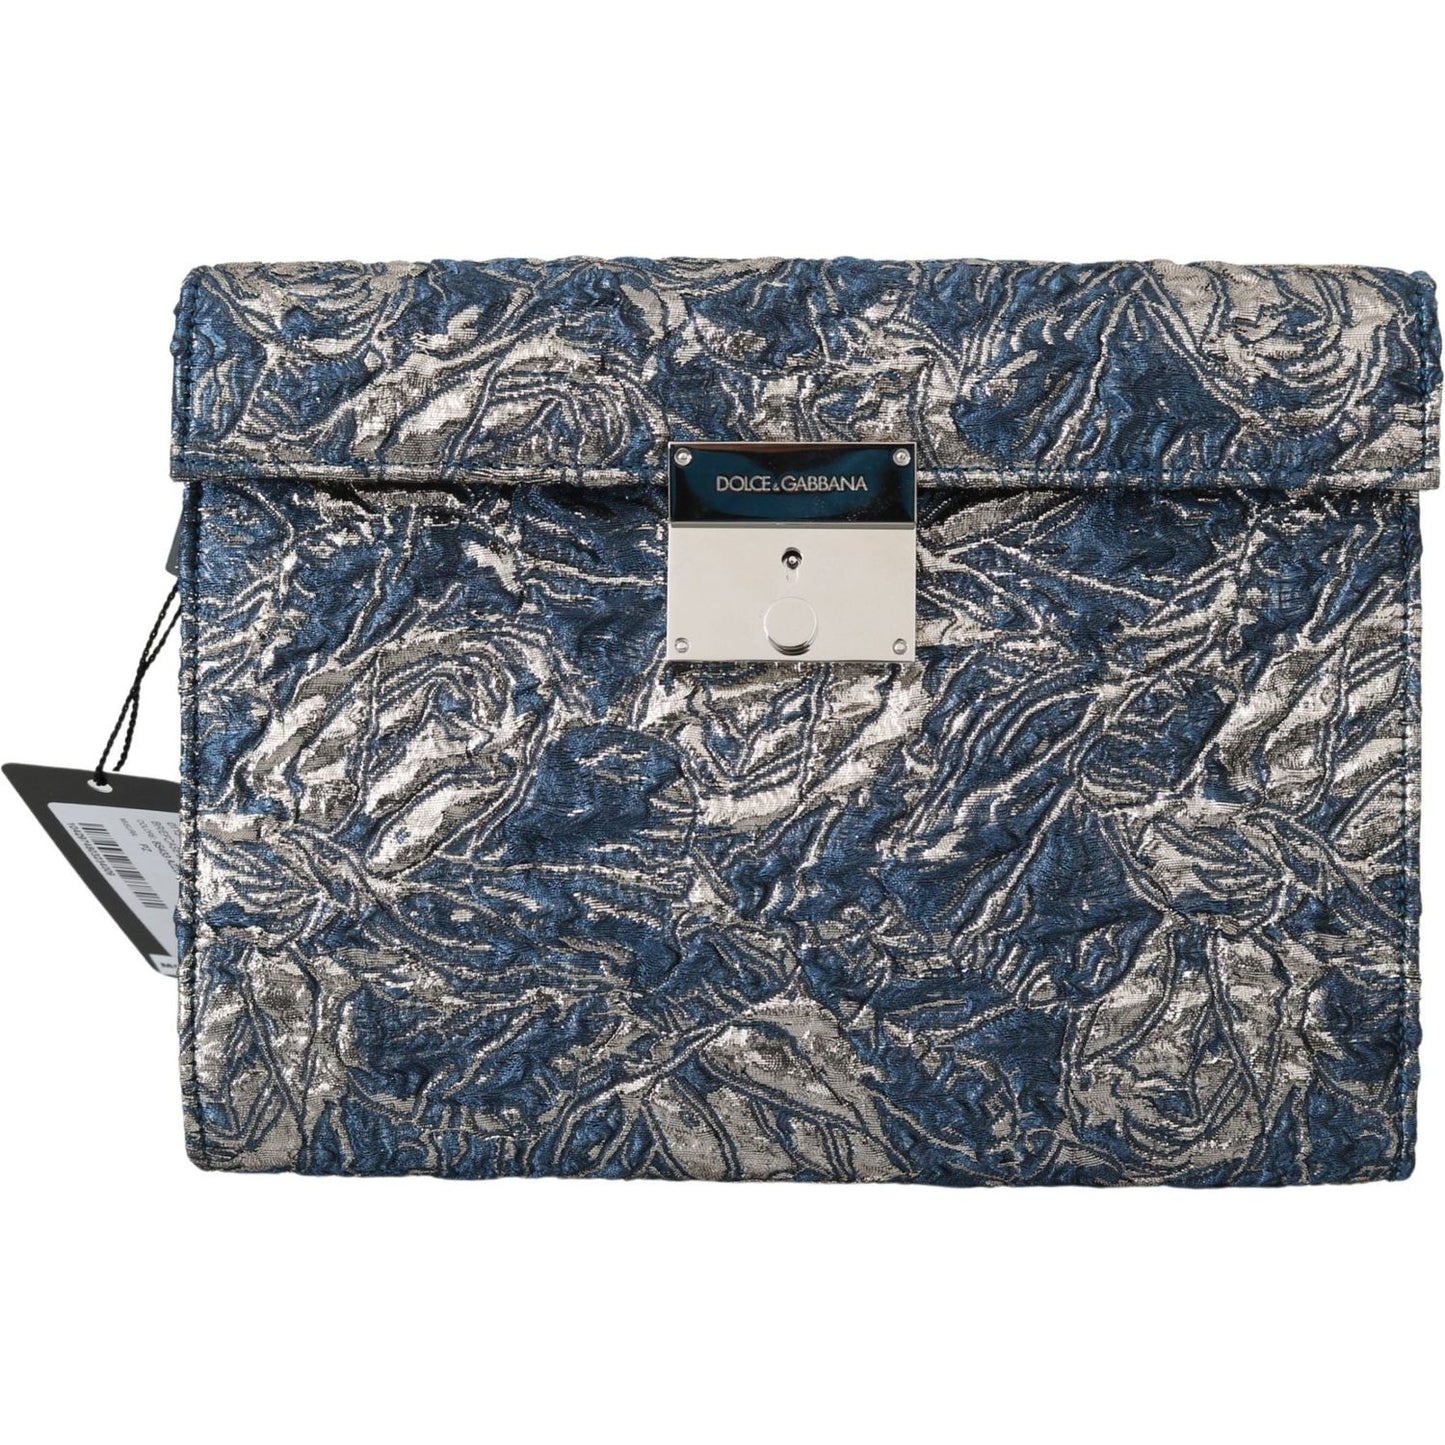 Dolce & Gabbana Elegant Blue Croc-Print Briefcase Clutch Briefcase blue-silver-jacquard-leather-document-briefcase-bag IMG_0198-1-scaled-40a2ce10-1bf.jpg